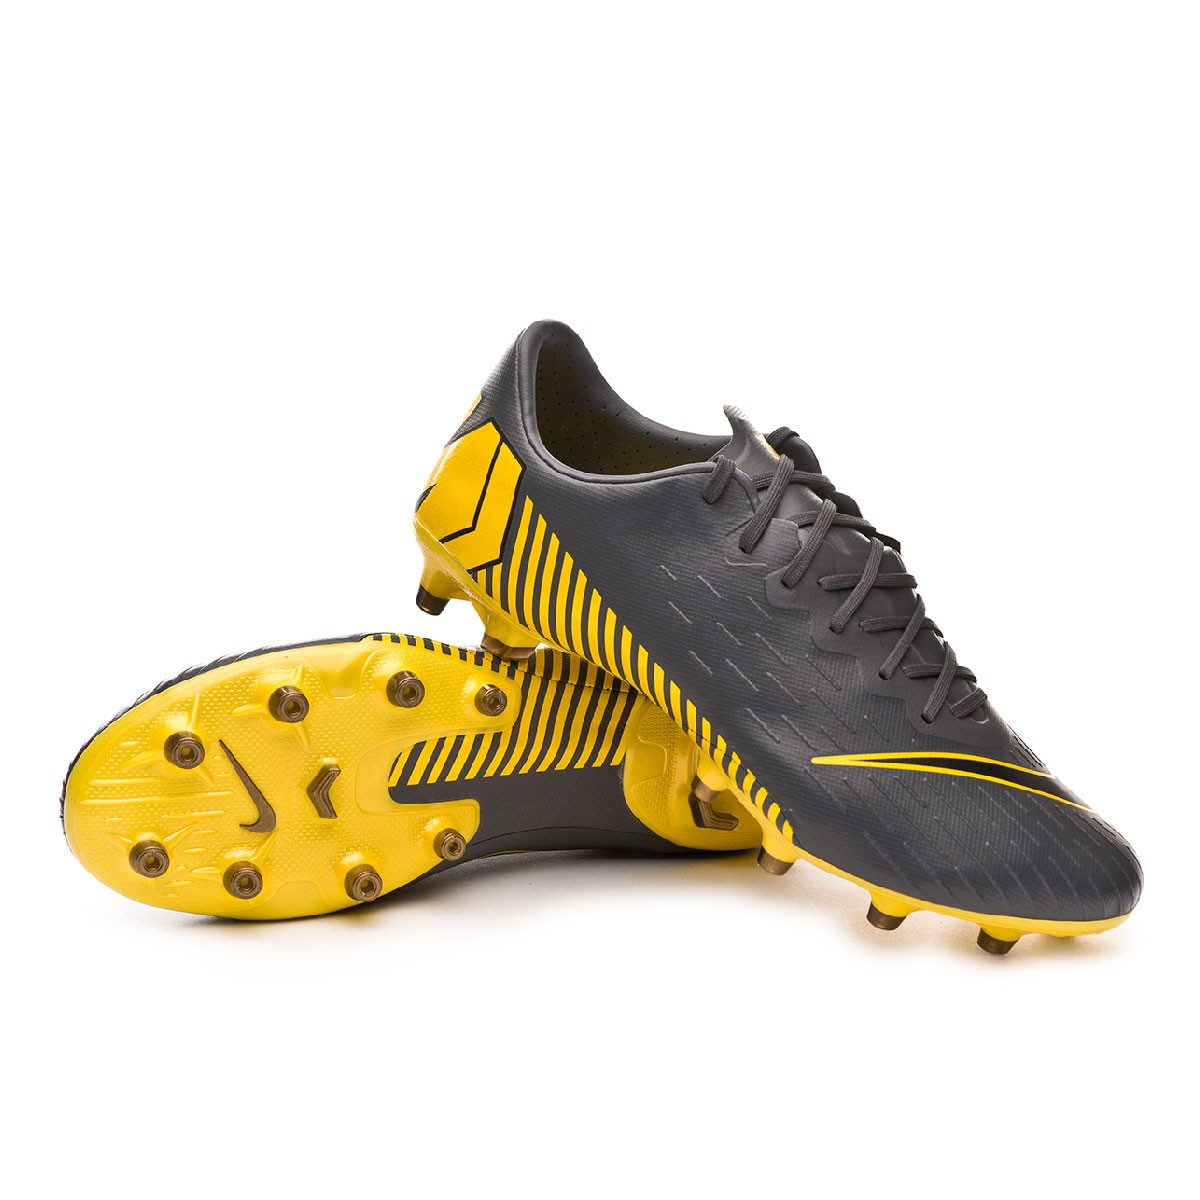 Bota de fútbol Nike Mercurial Vapor XII Pro AG-Pro Dark grey-Black-Optical  yellow - Tienda de fútbol Fútbol Emotion